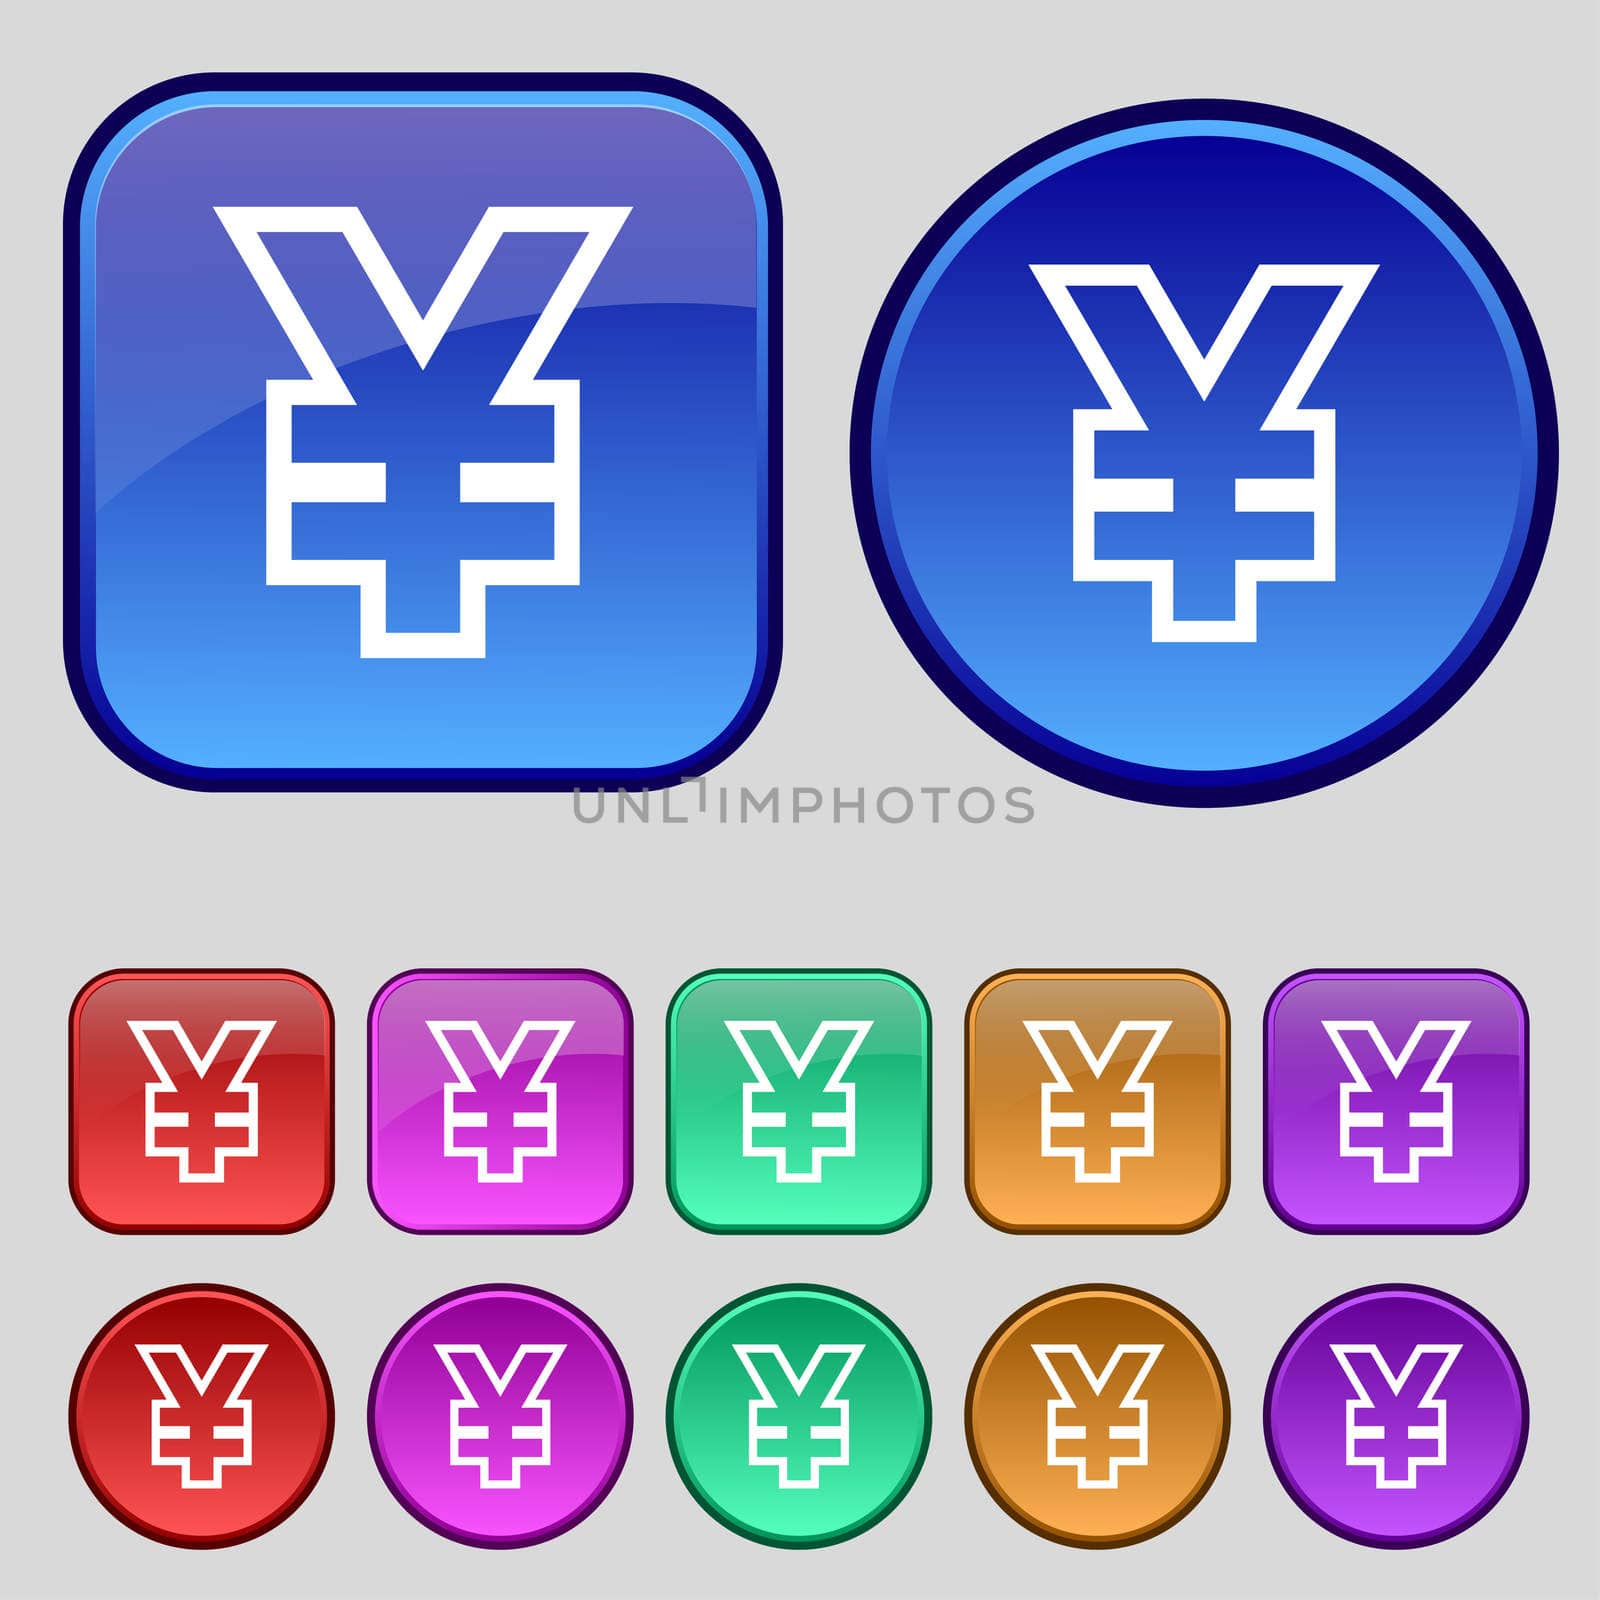 Yen JPY icon sign. A set of twelve vintage buttons for your design. illustration